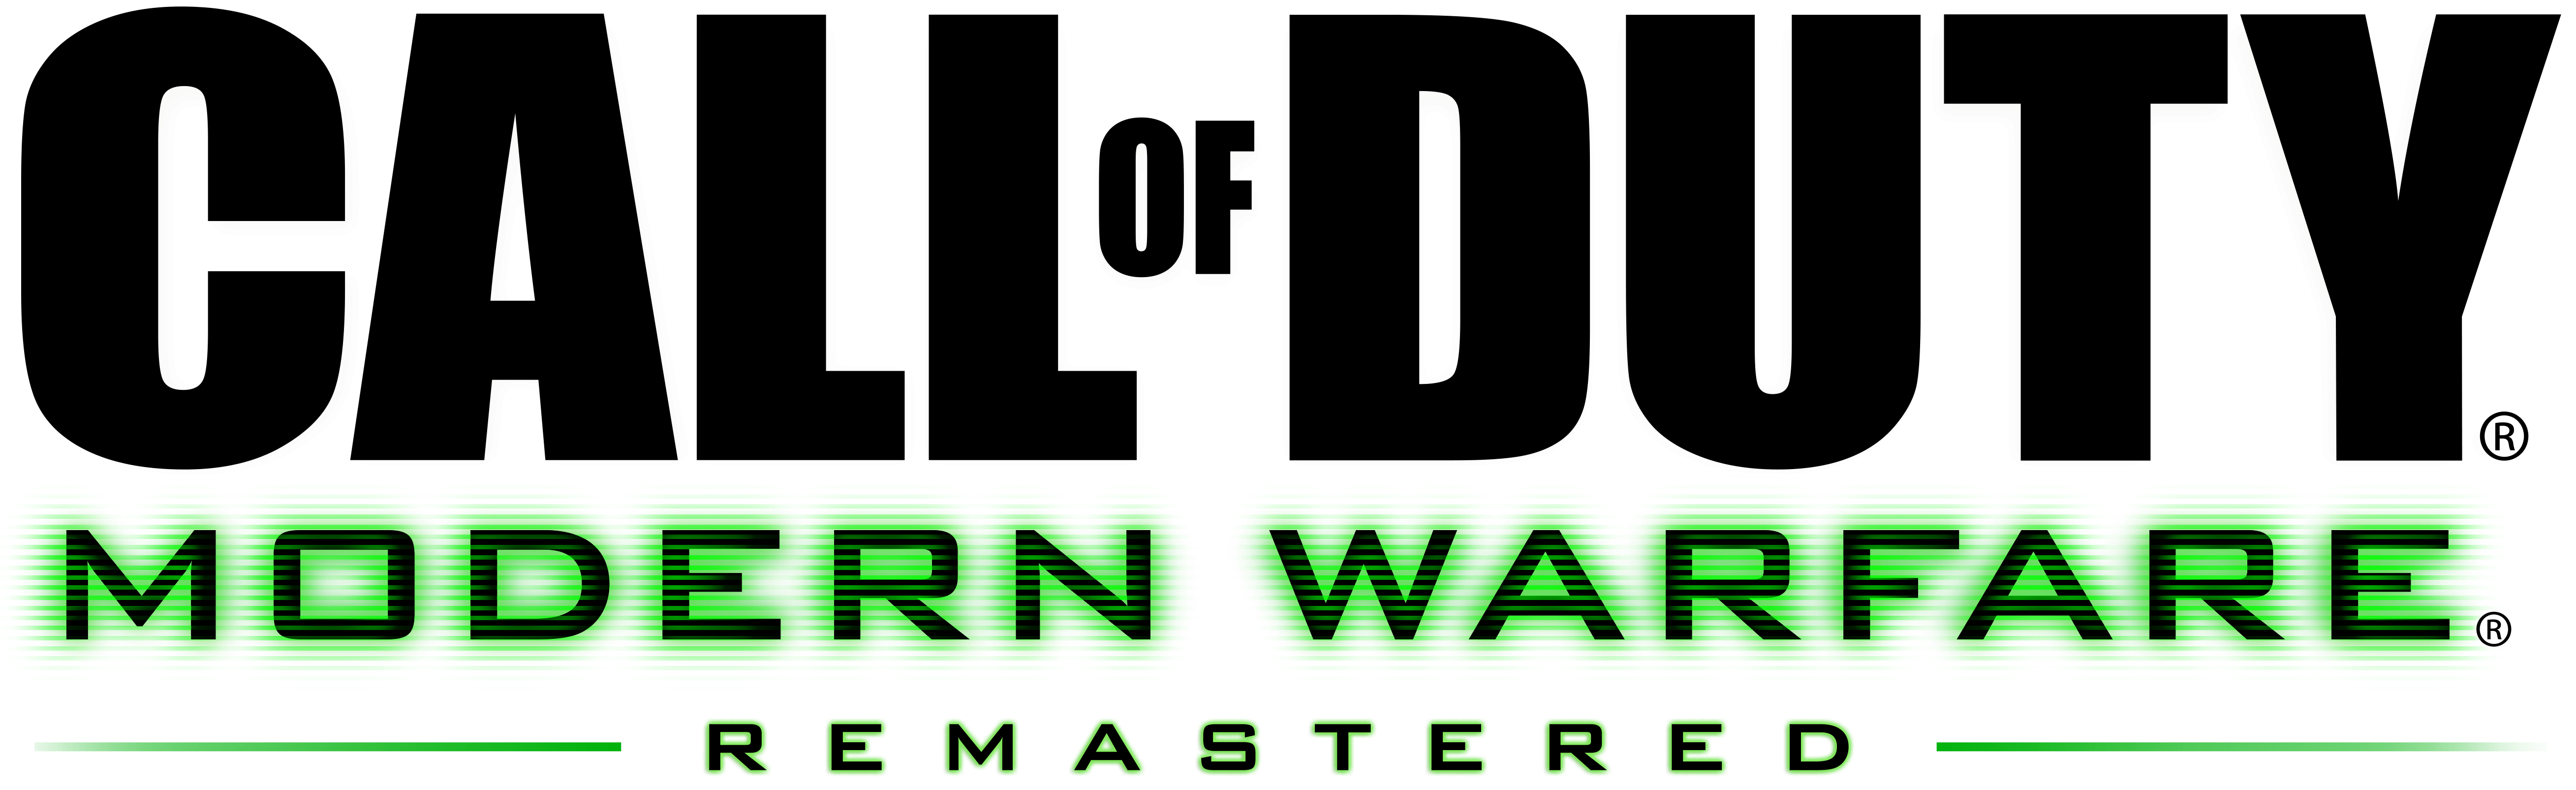 Modern Warfare PNG HD Logo PNG Pic